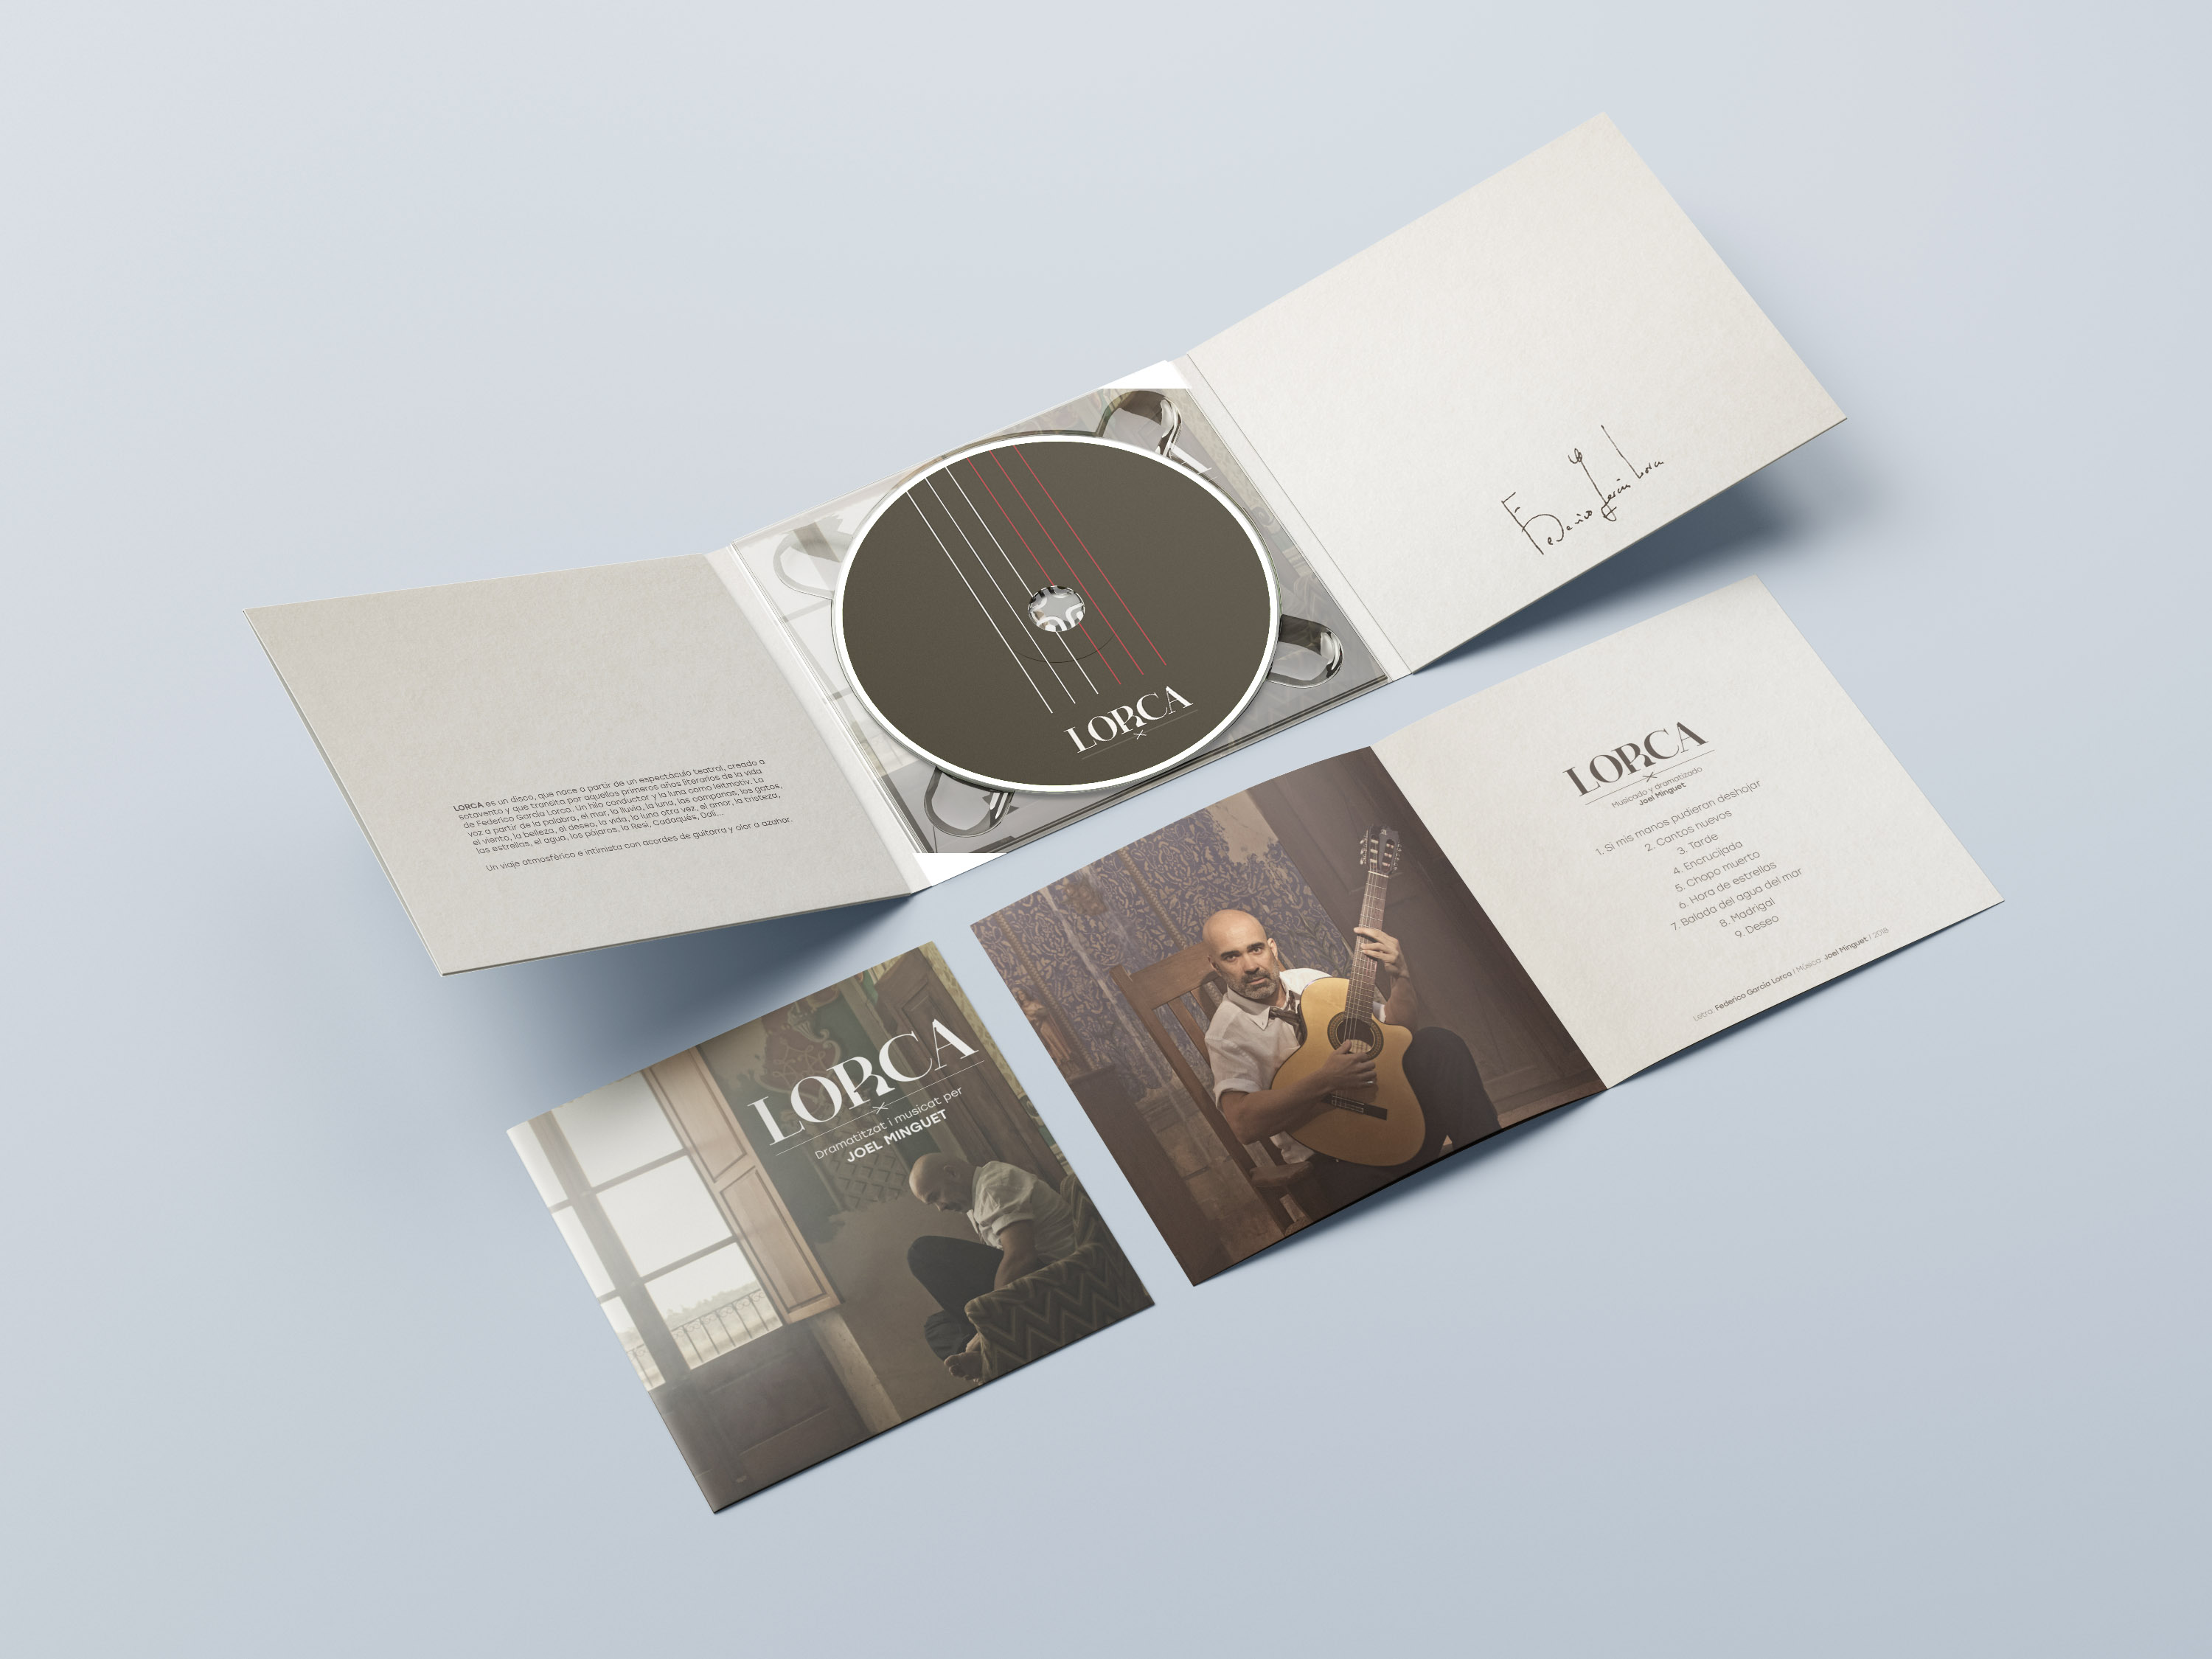 Lorca-CD-Mockup.jpg